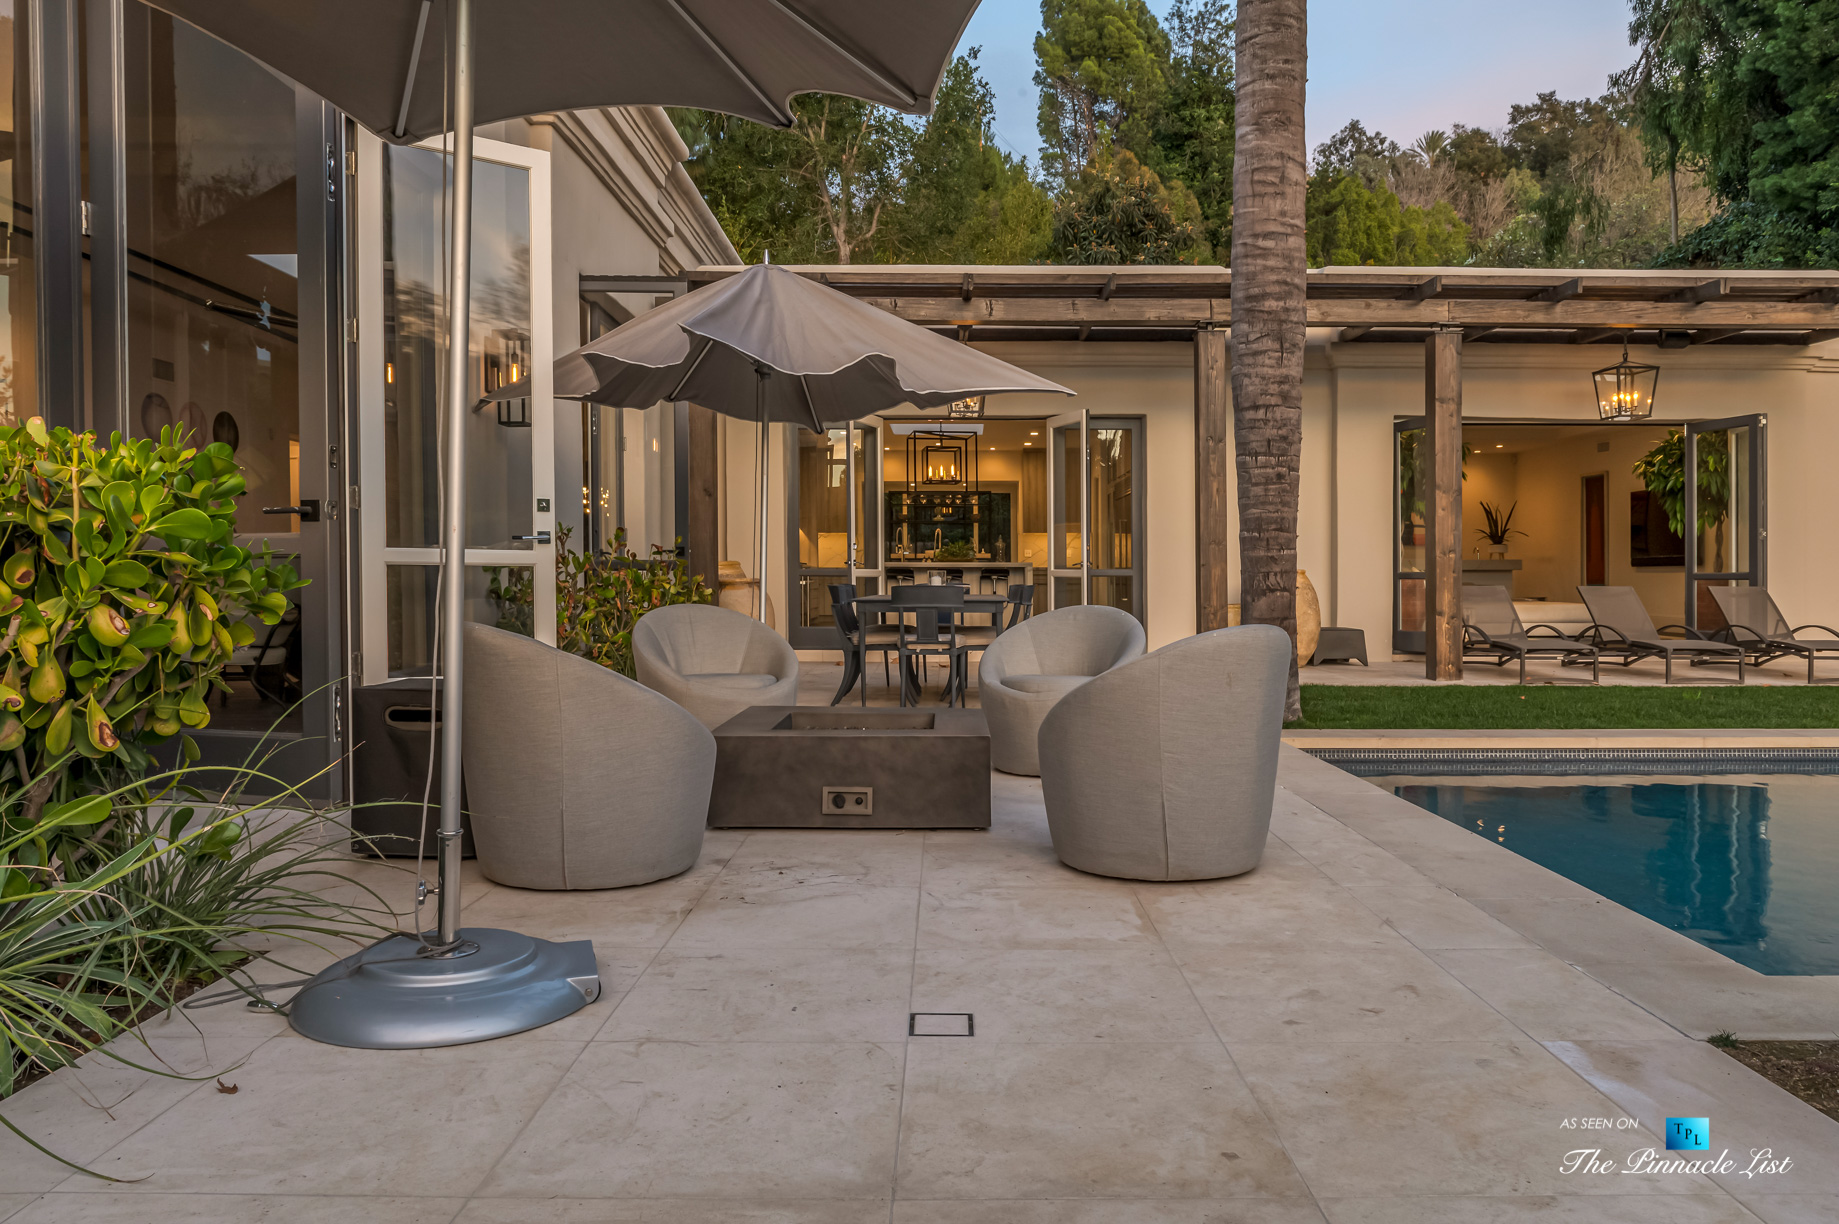 2720 Ellison Dr, Beverly Hills, CA, USA - Deck Umbrellas Next to Pool - Luxury Real Estate - Italian Villa Hilltop Home